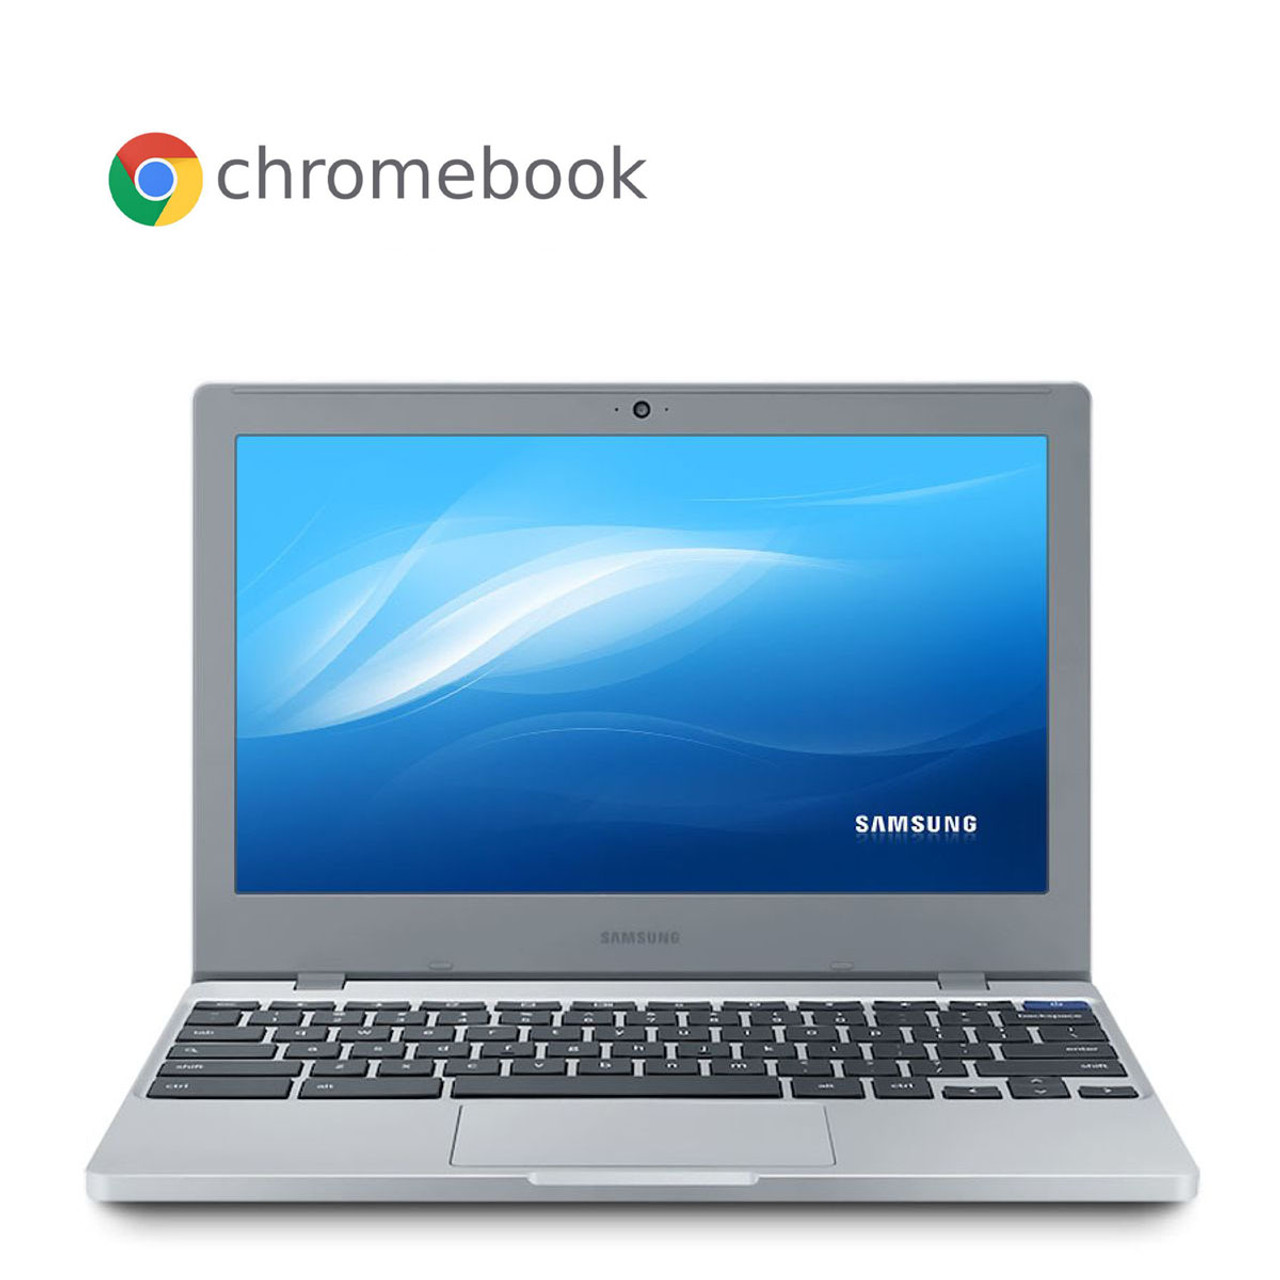 Samsung Chromebook 4 (11.6in Celeron 1.1GHz, 4GB RAM, 16GB SSD) product image